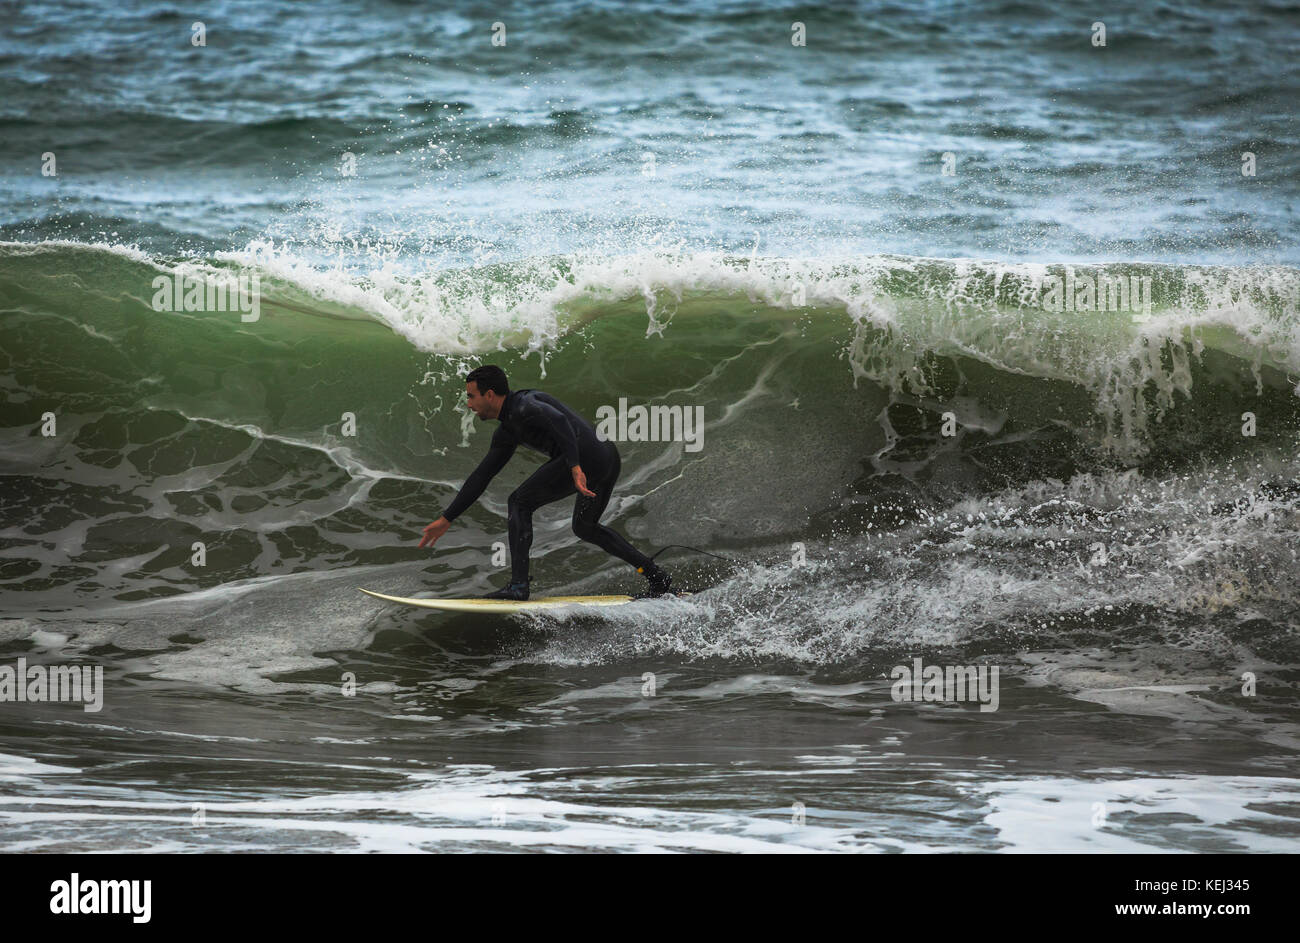 California Surfer Stock Photo